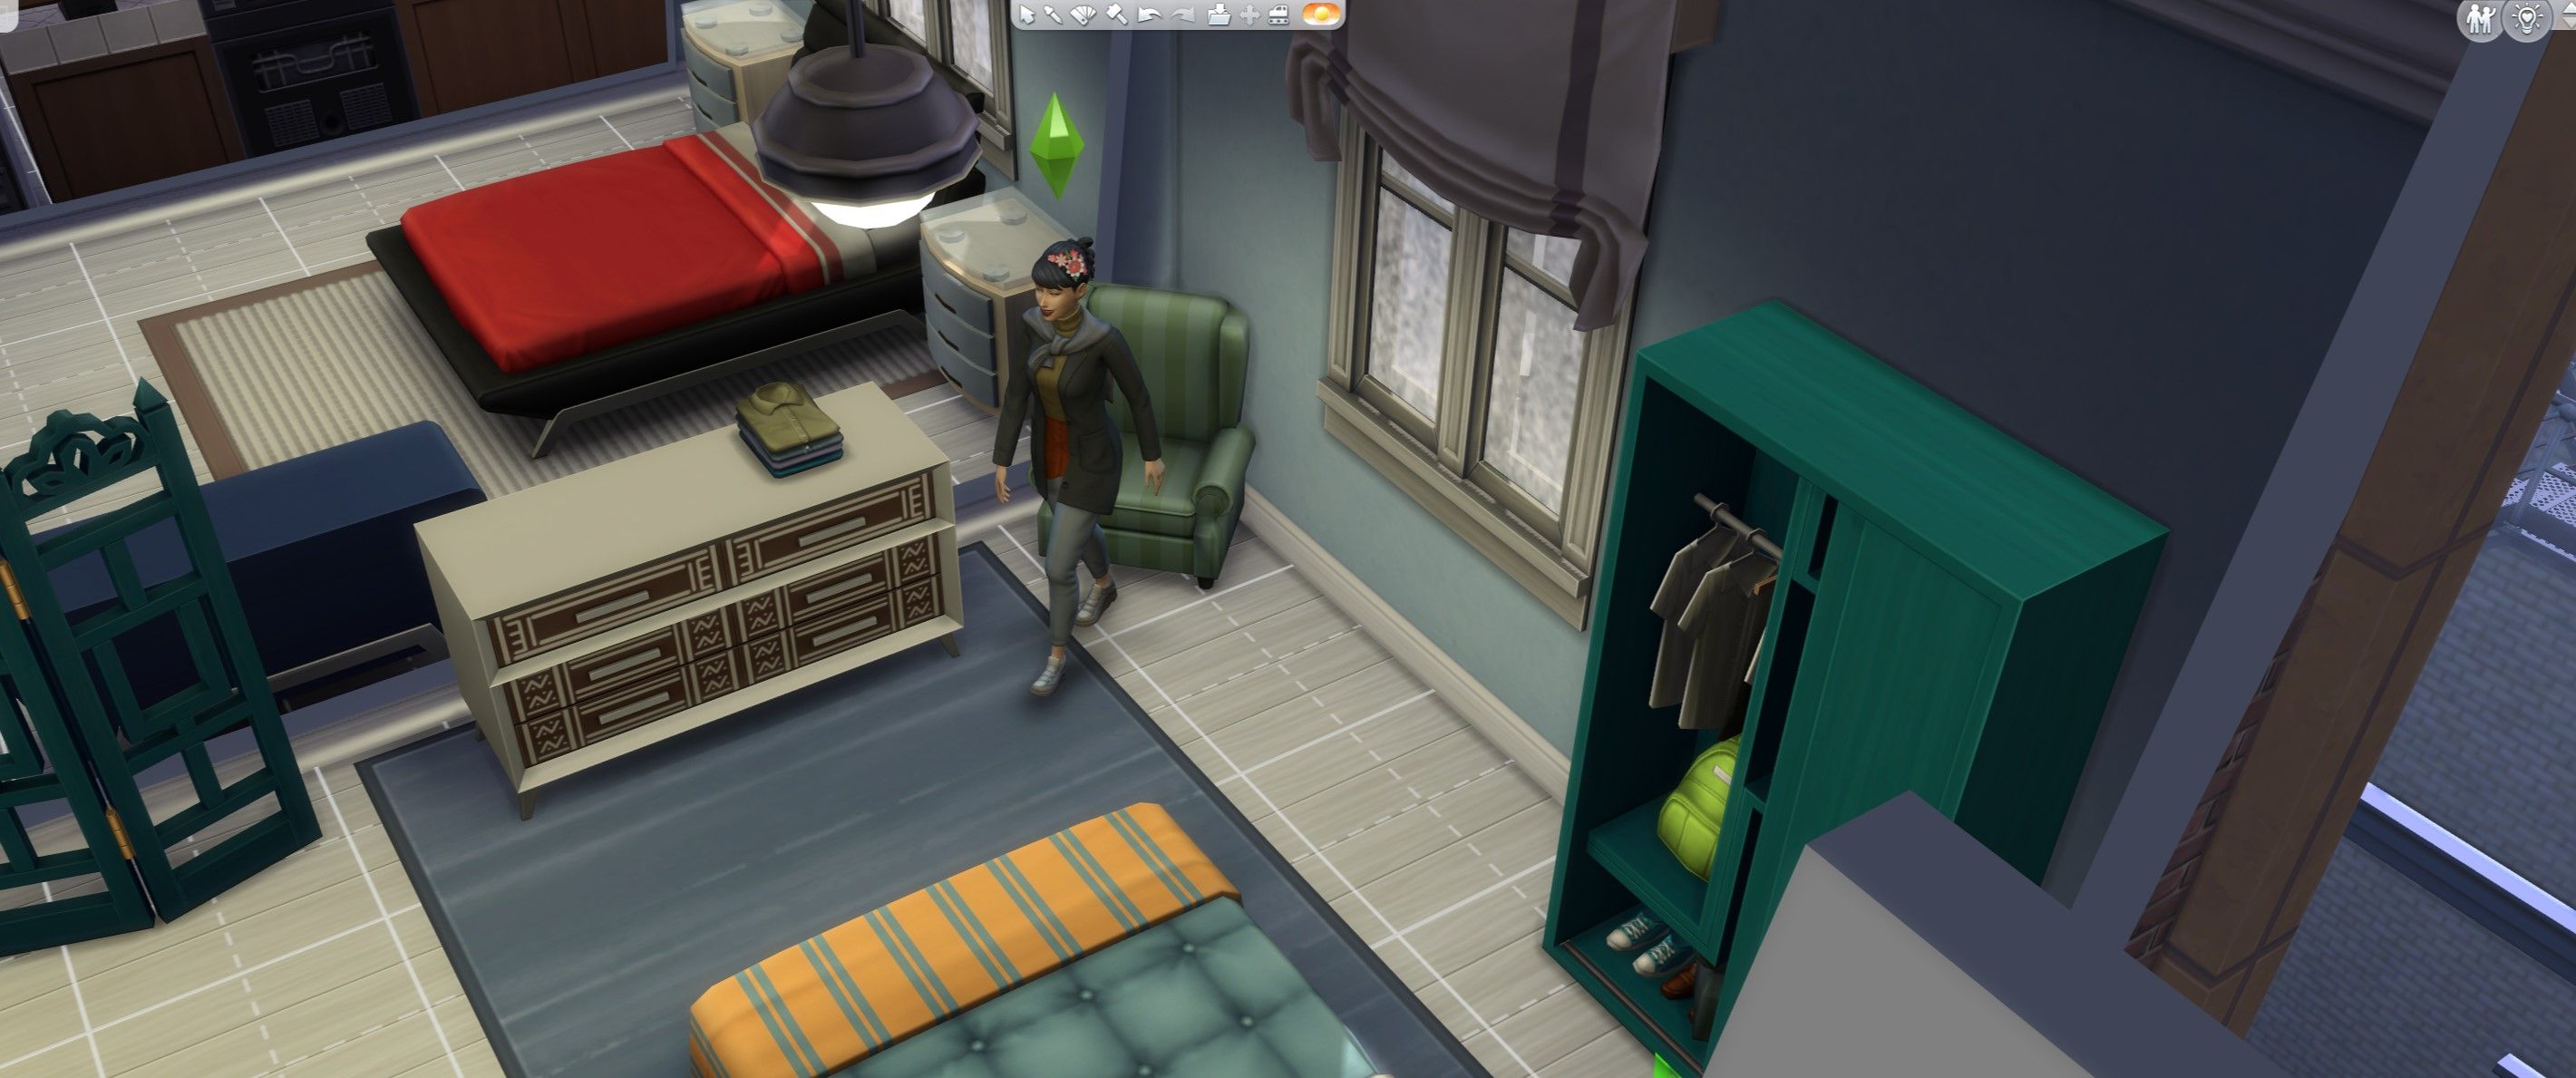 The Sims 4: A Sim in the Interior Design build mode screen